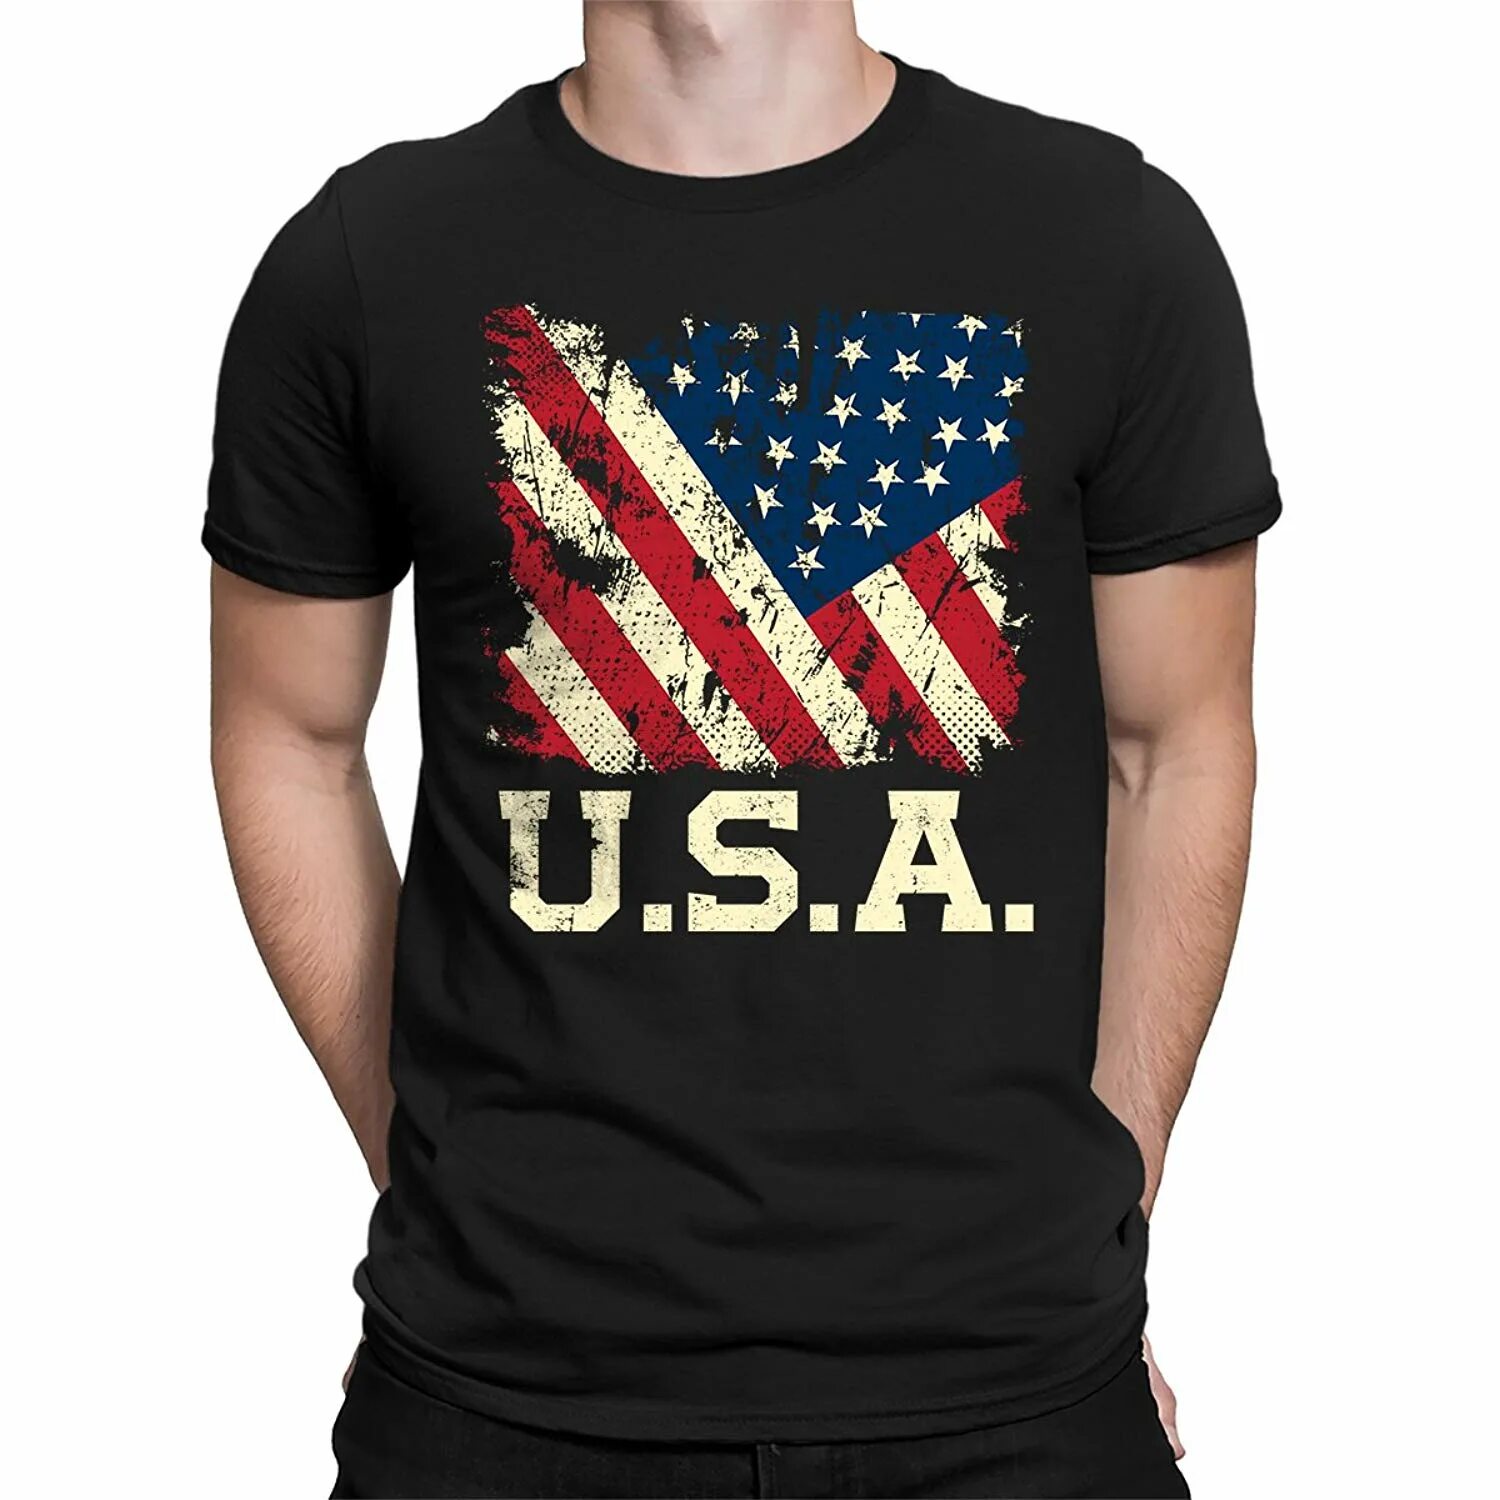 Американские надписи на футболках. Футболка с американским флагом. Майки американские мужские. Футболка с надписью USA. Купить футболку s